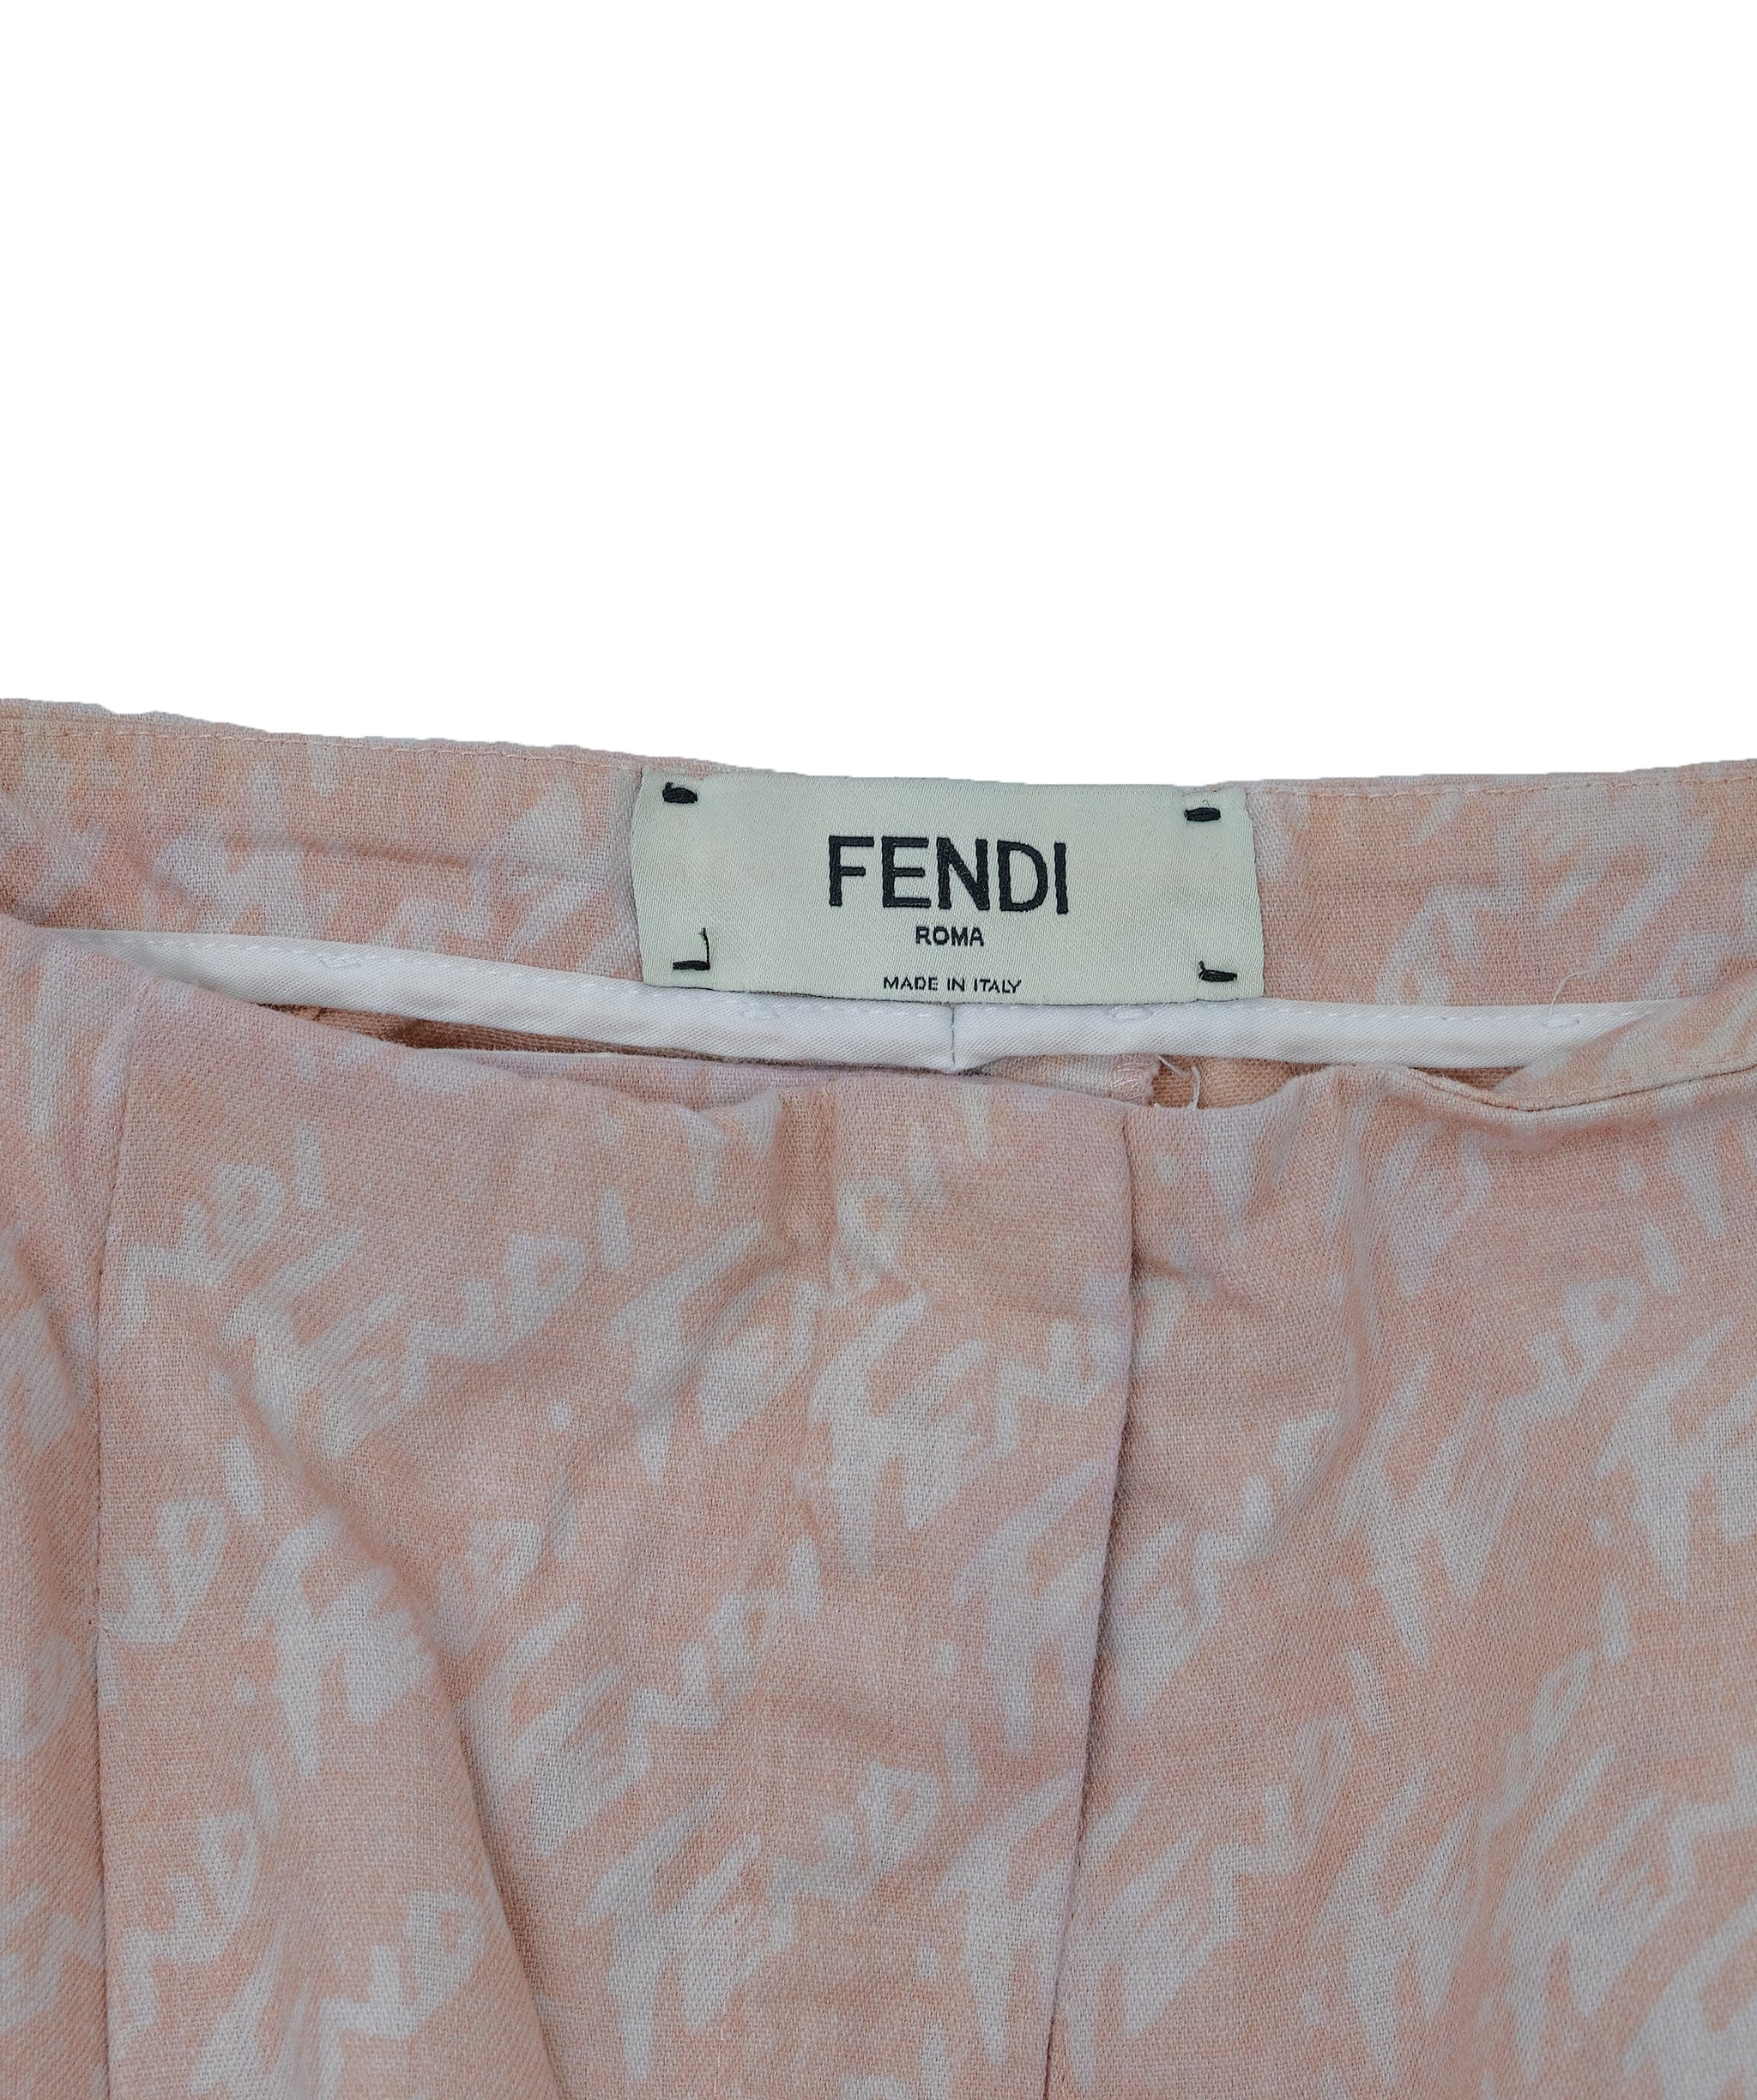 Fendi Fendi Shorts pink RJC3191